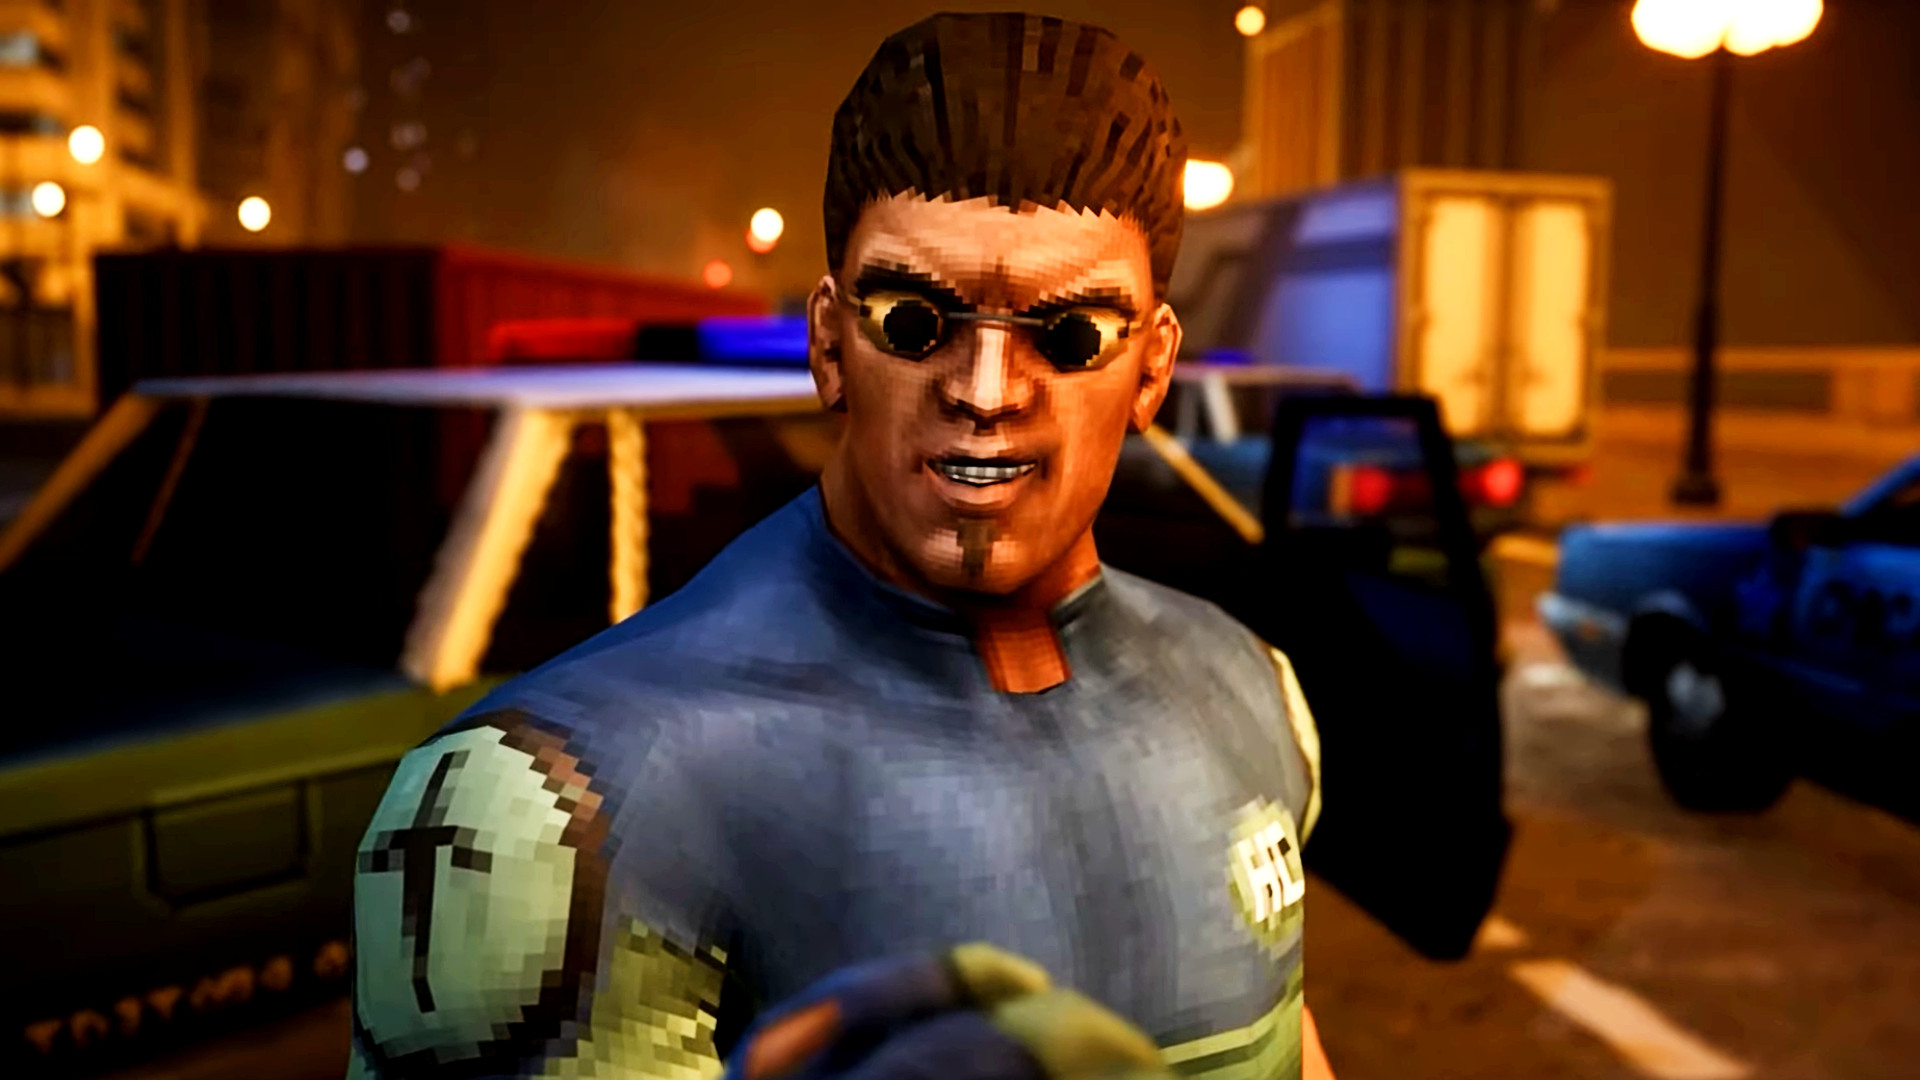 Phantom Fury evokes Duke Nukem and Half-Life in a road movie FPS game